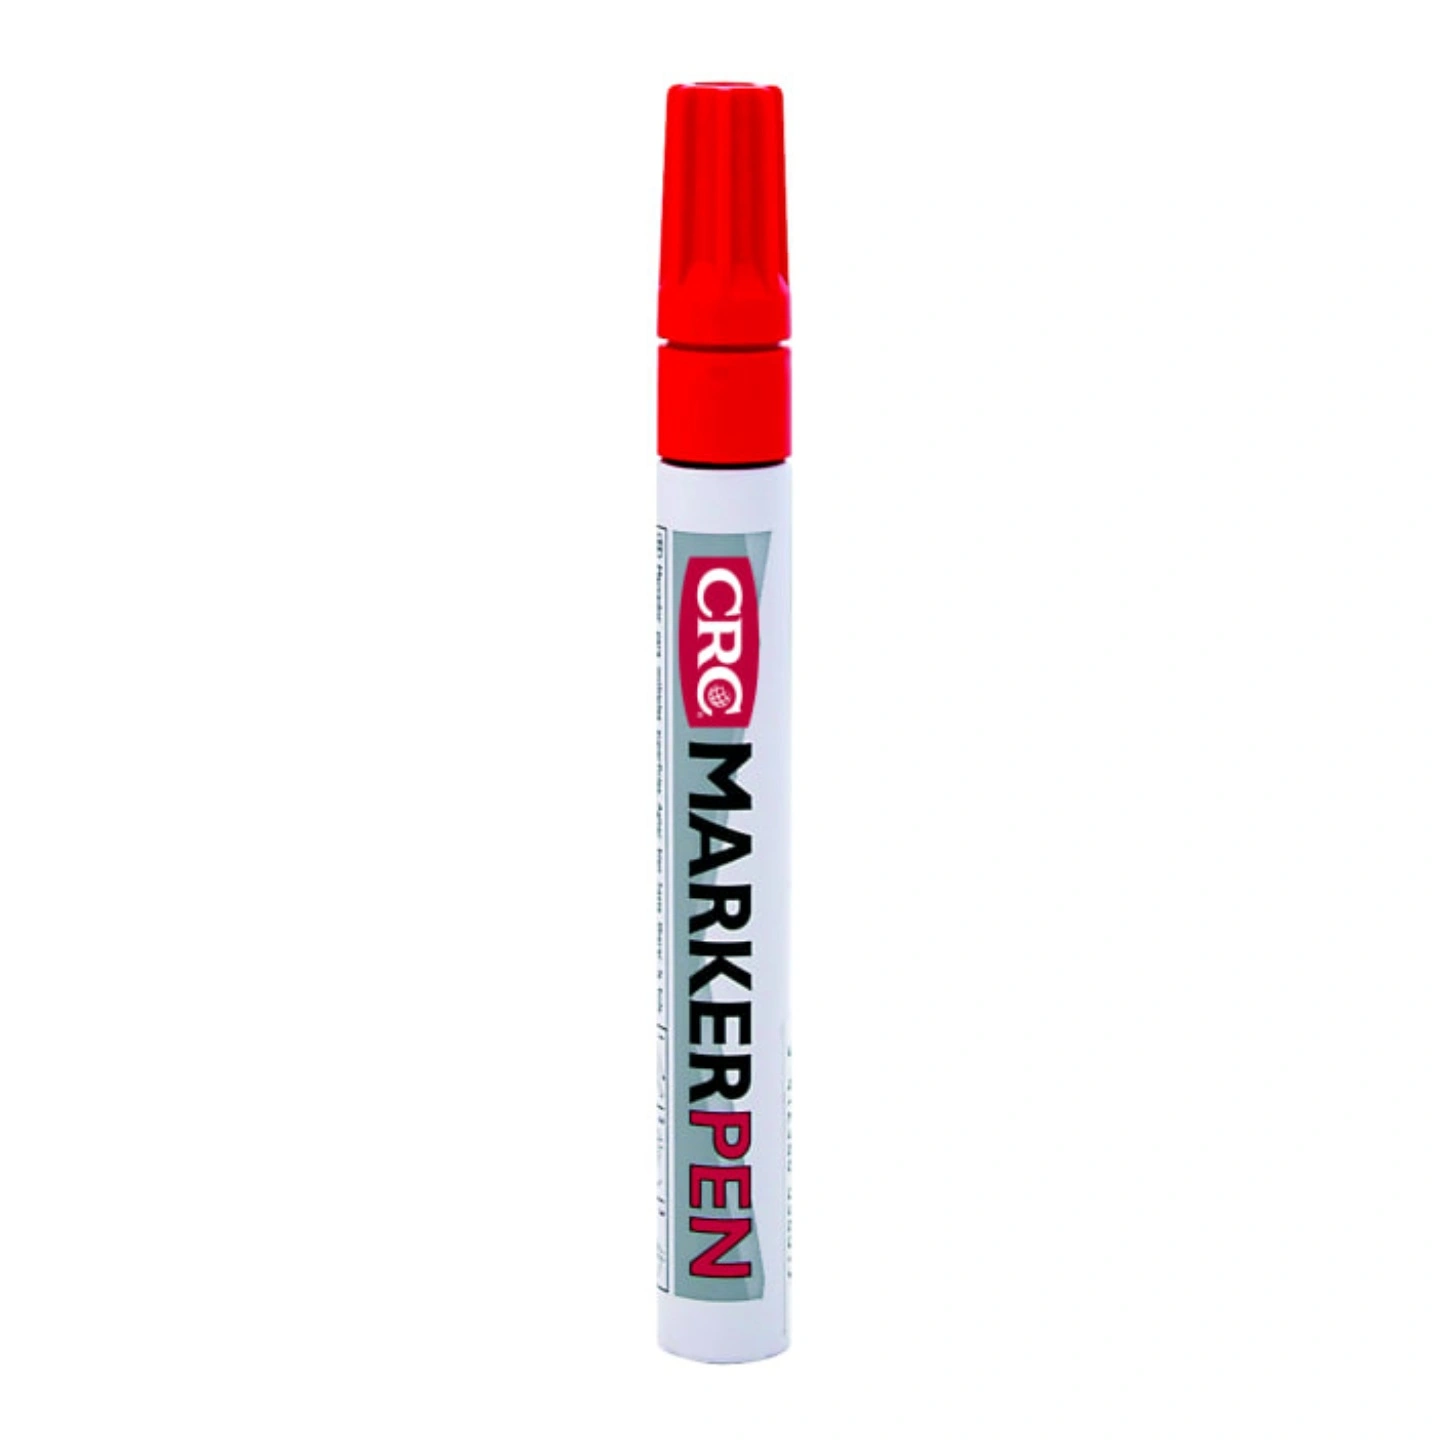 CRC Marker Pen - Merketusj Rød